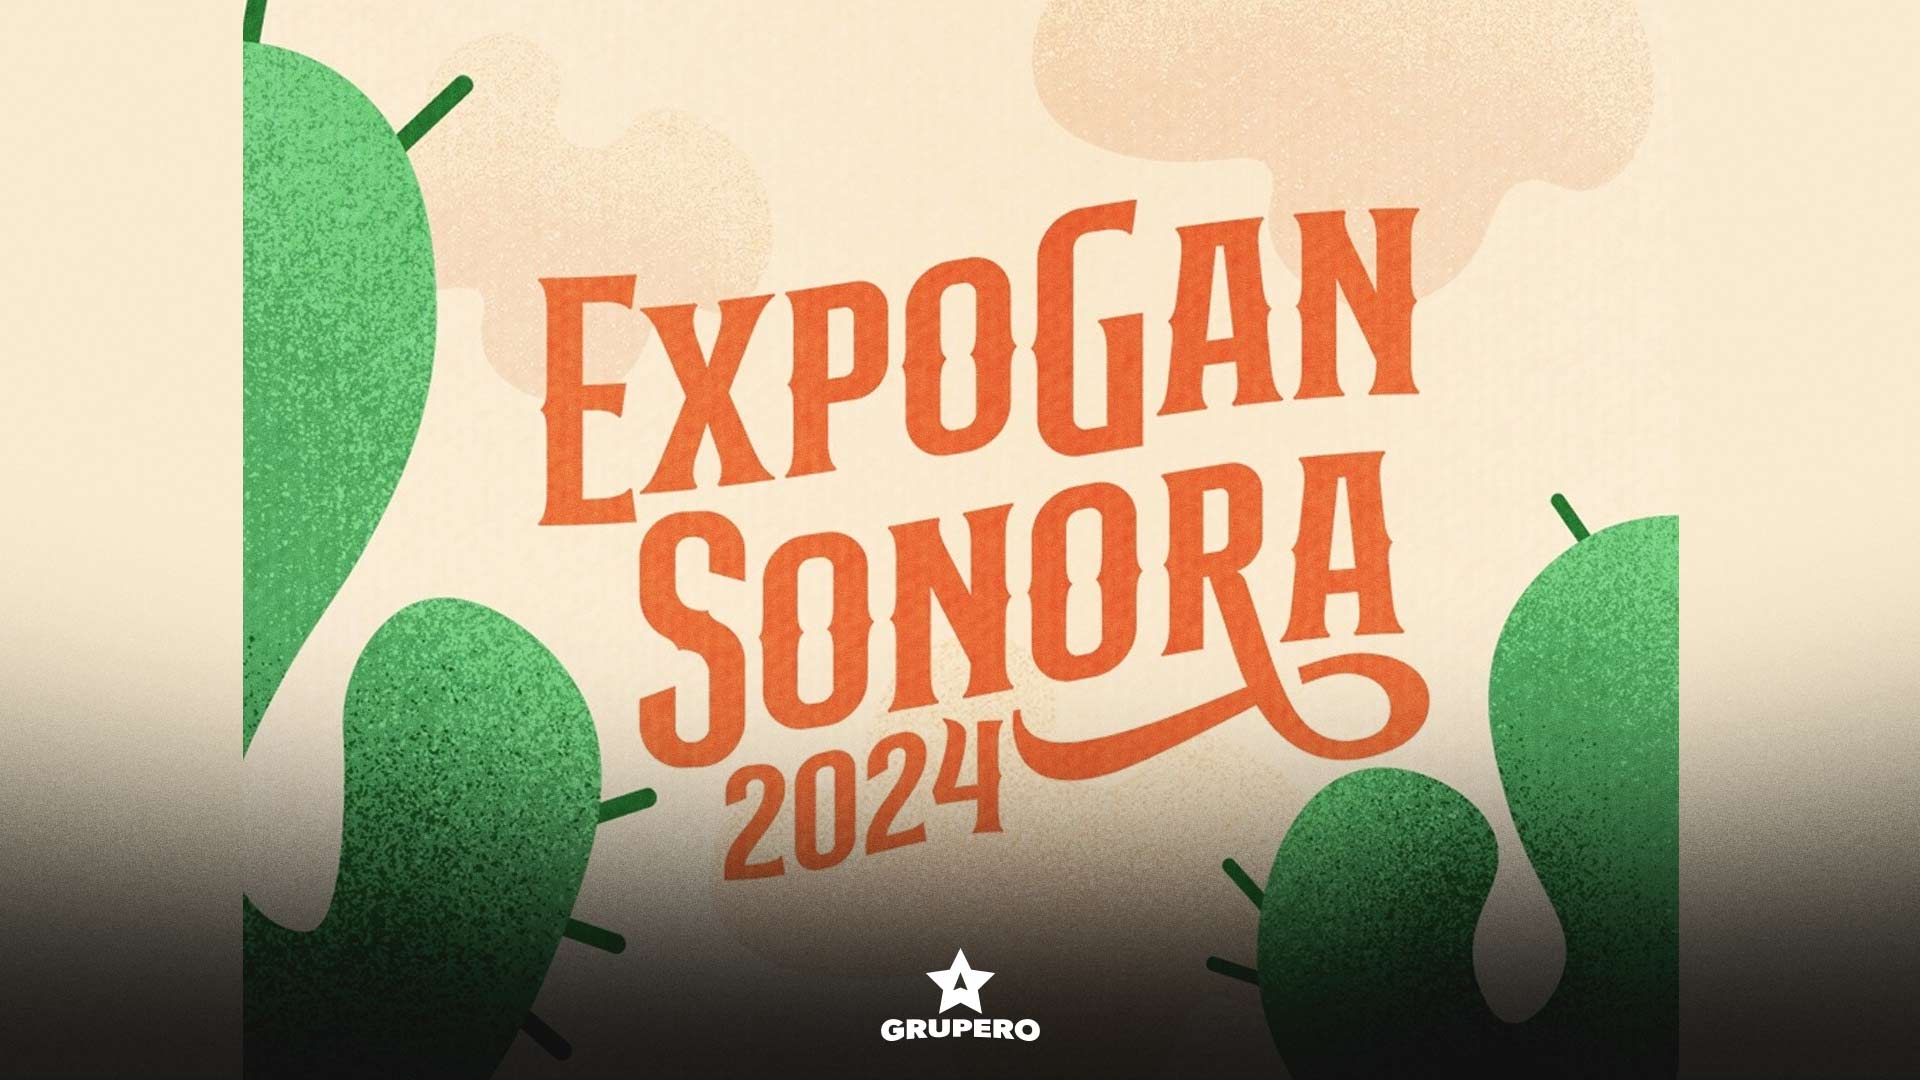 ExpoGan Sonora 2024